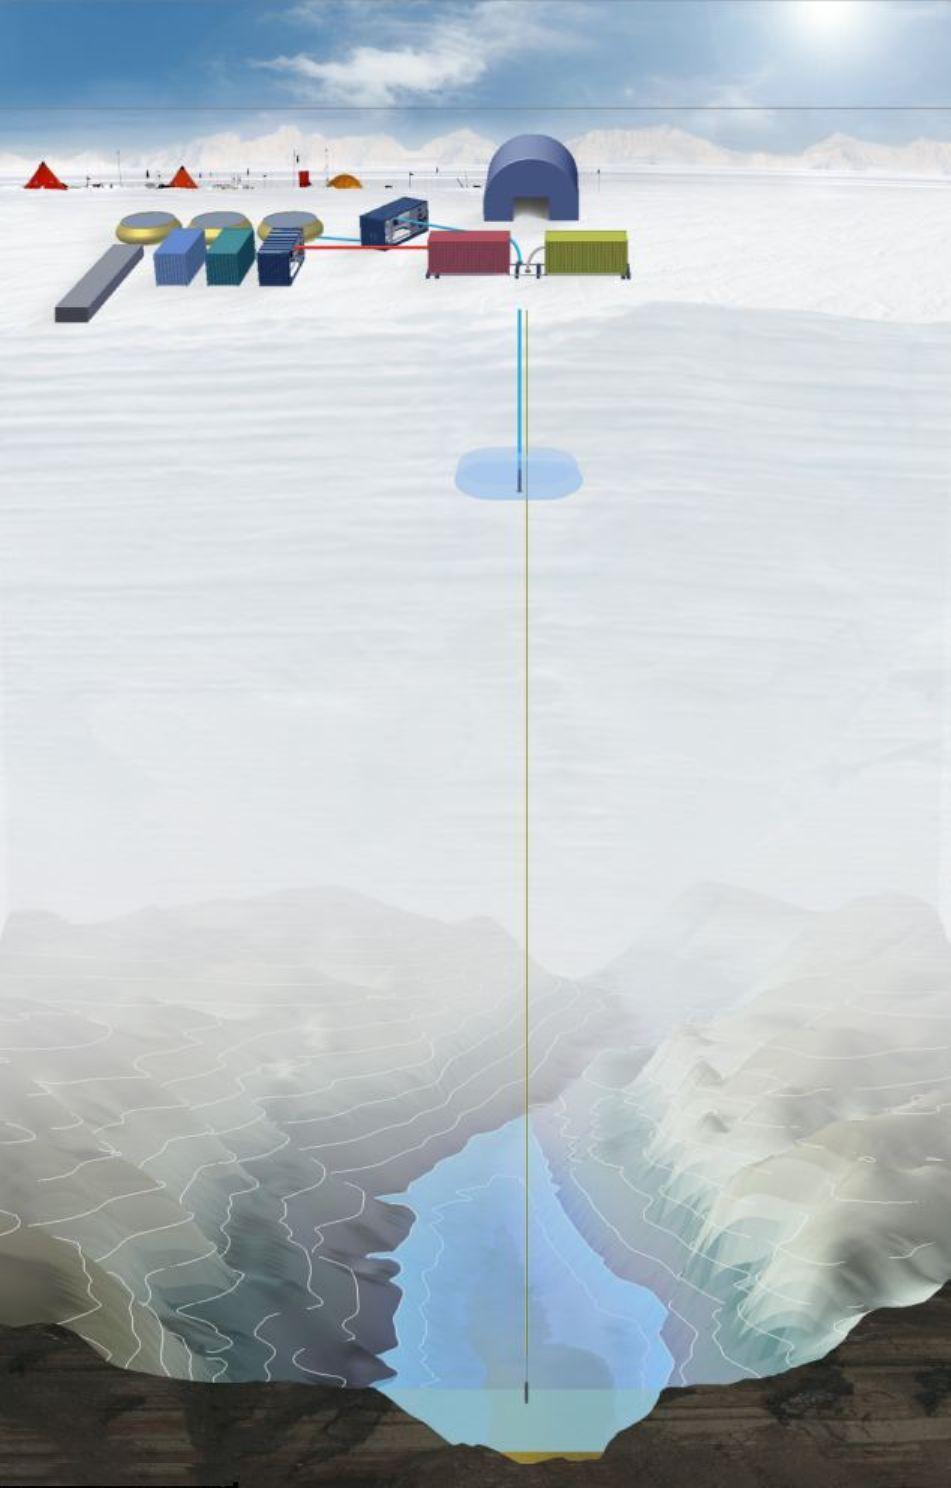 Озеро подо льдом в Антарктиде